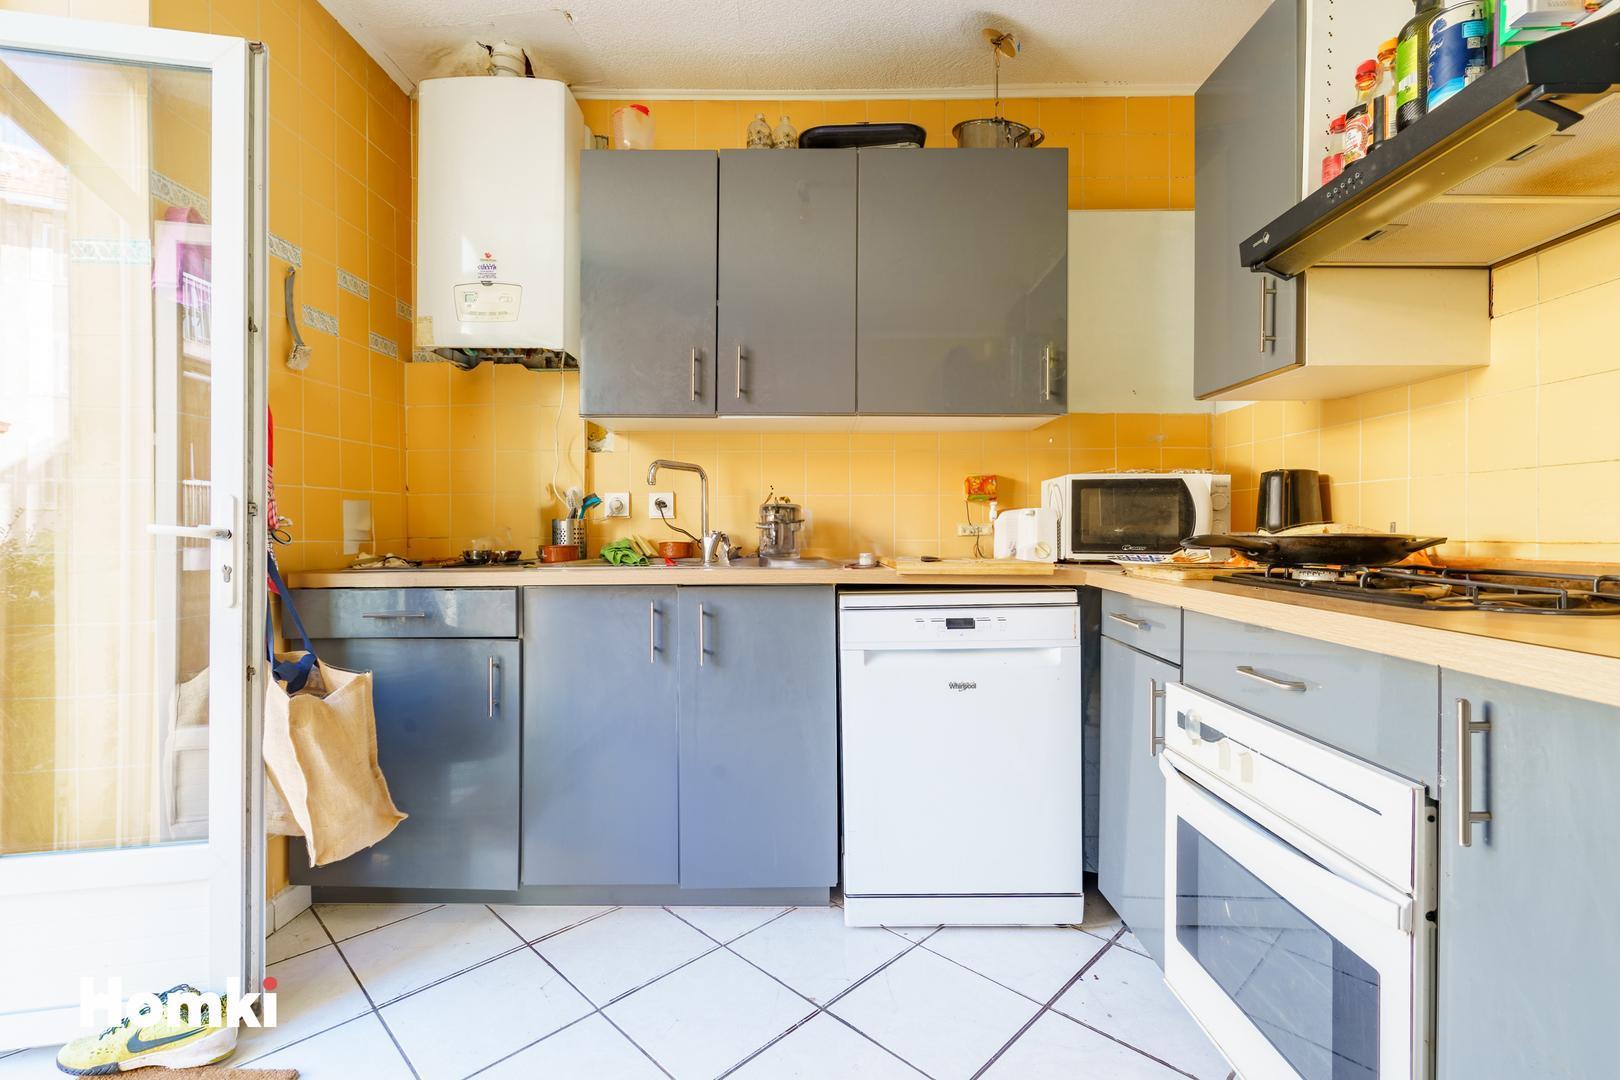 Homki - Vente Appartement  de 80.0 m² à Biarritz 64200